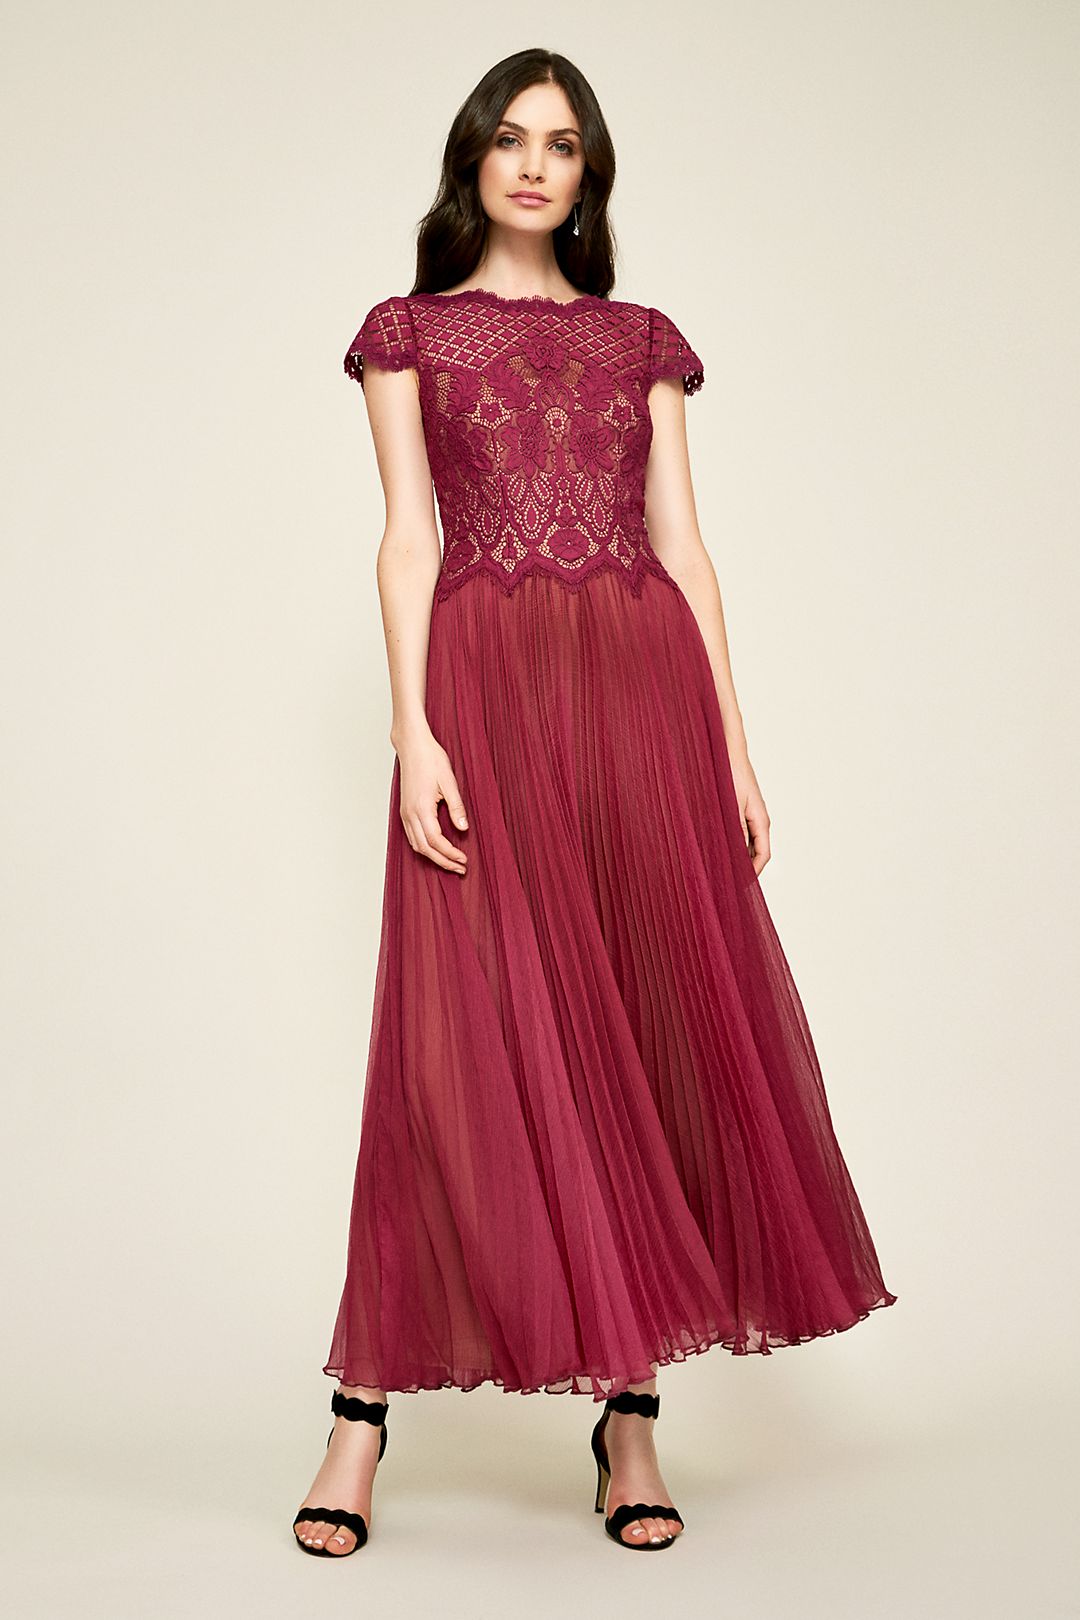 Pleated Tea-Length Chiffon Dress with Lace Bodice Image 1